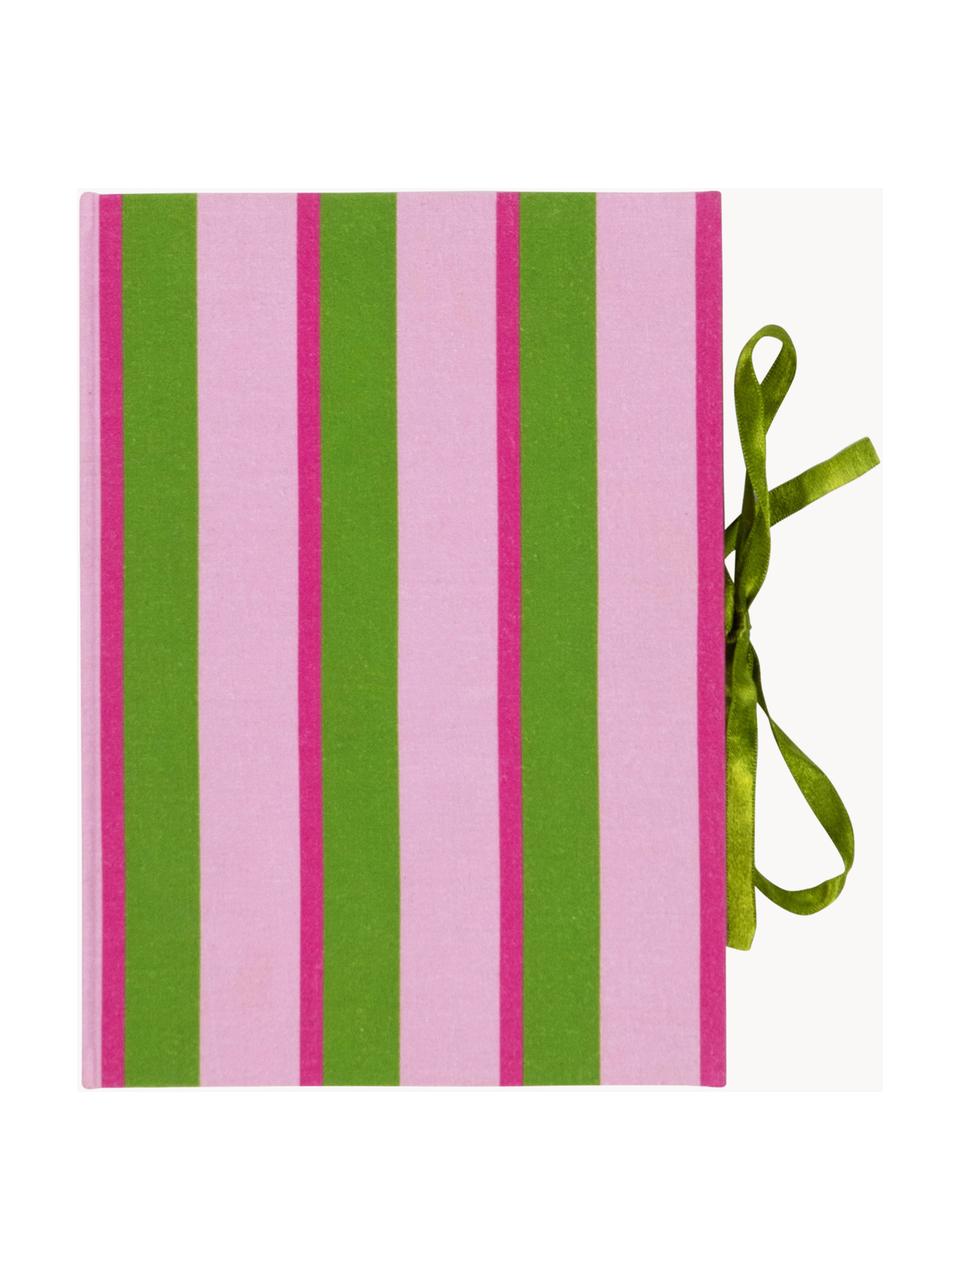 Deník Secret Tales, Bavlna, papír 80 g/m², barevný papír, karton, Růžová, zelená, Š 16 cm, V 22 cm